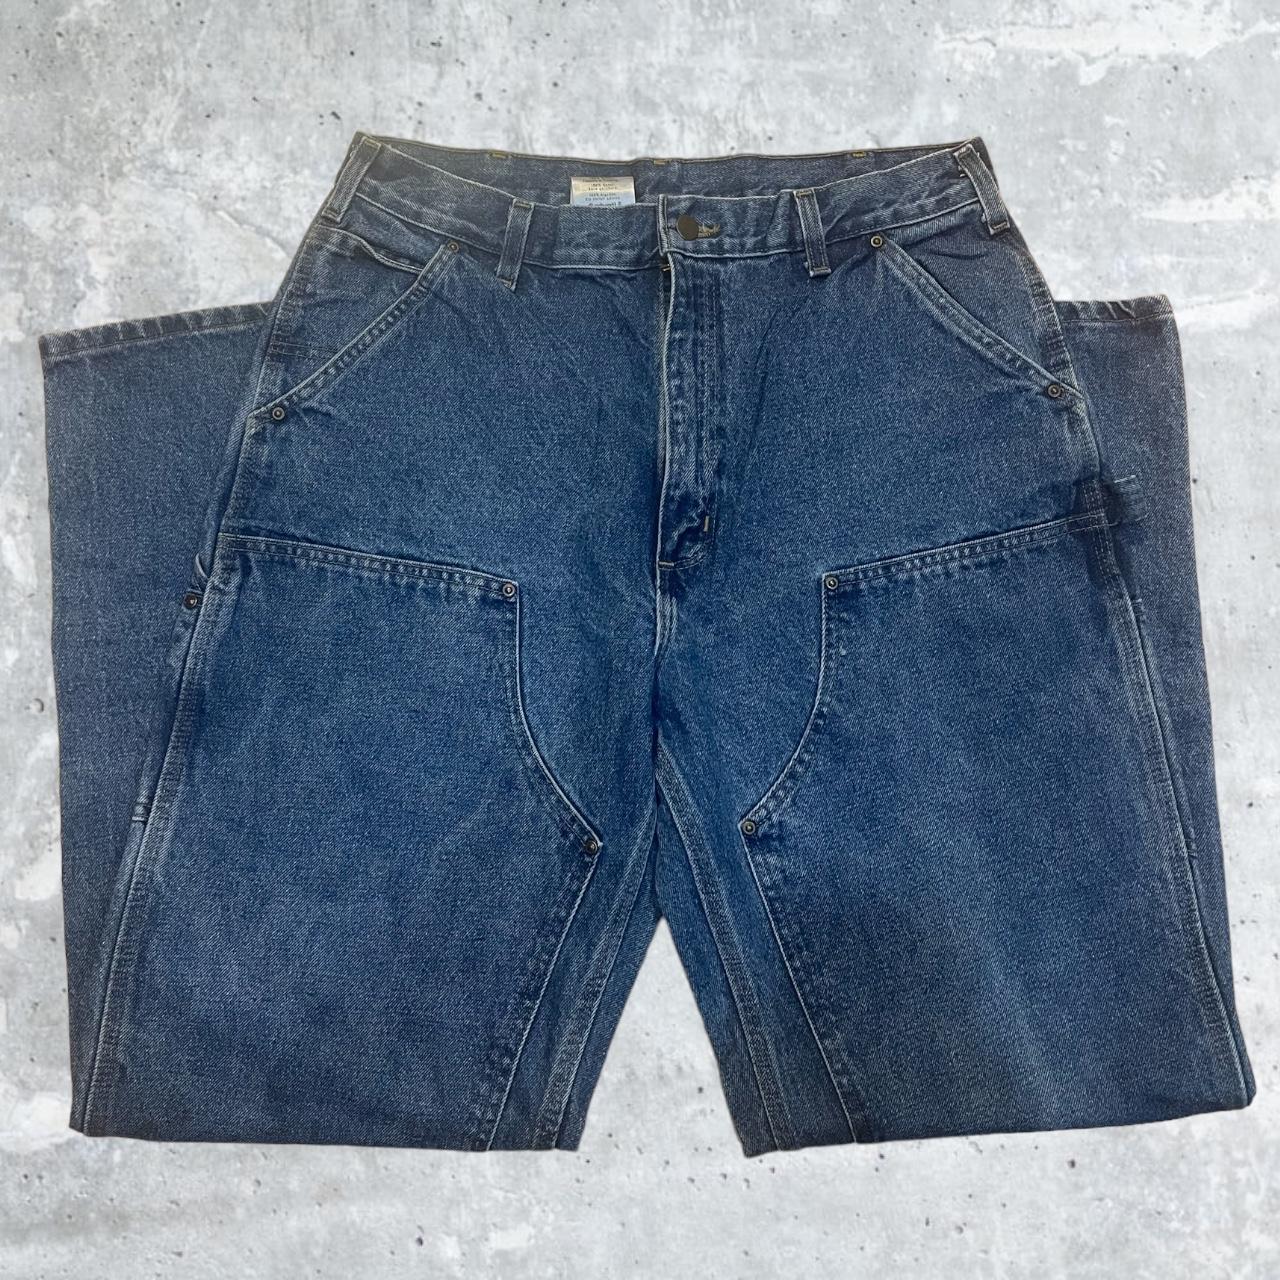 Vintage Carhartt Double Knee Carpenter Jeans in a... - Depop